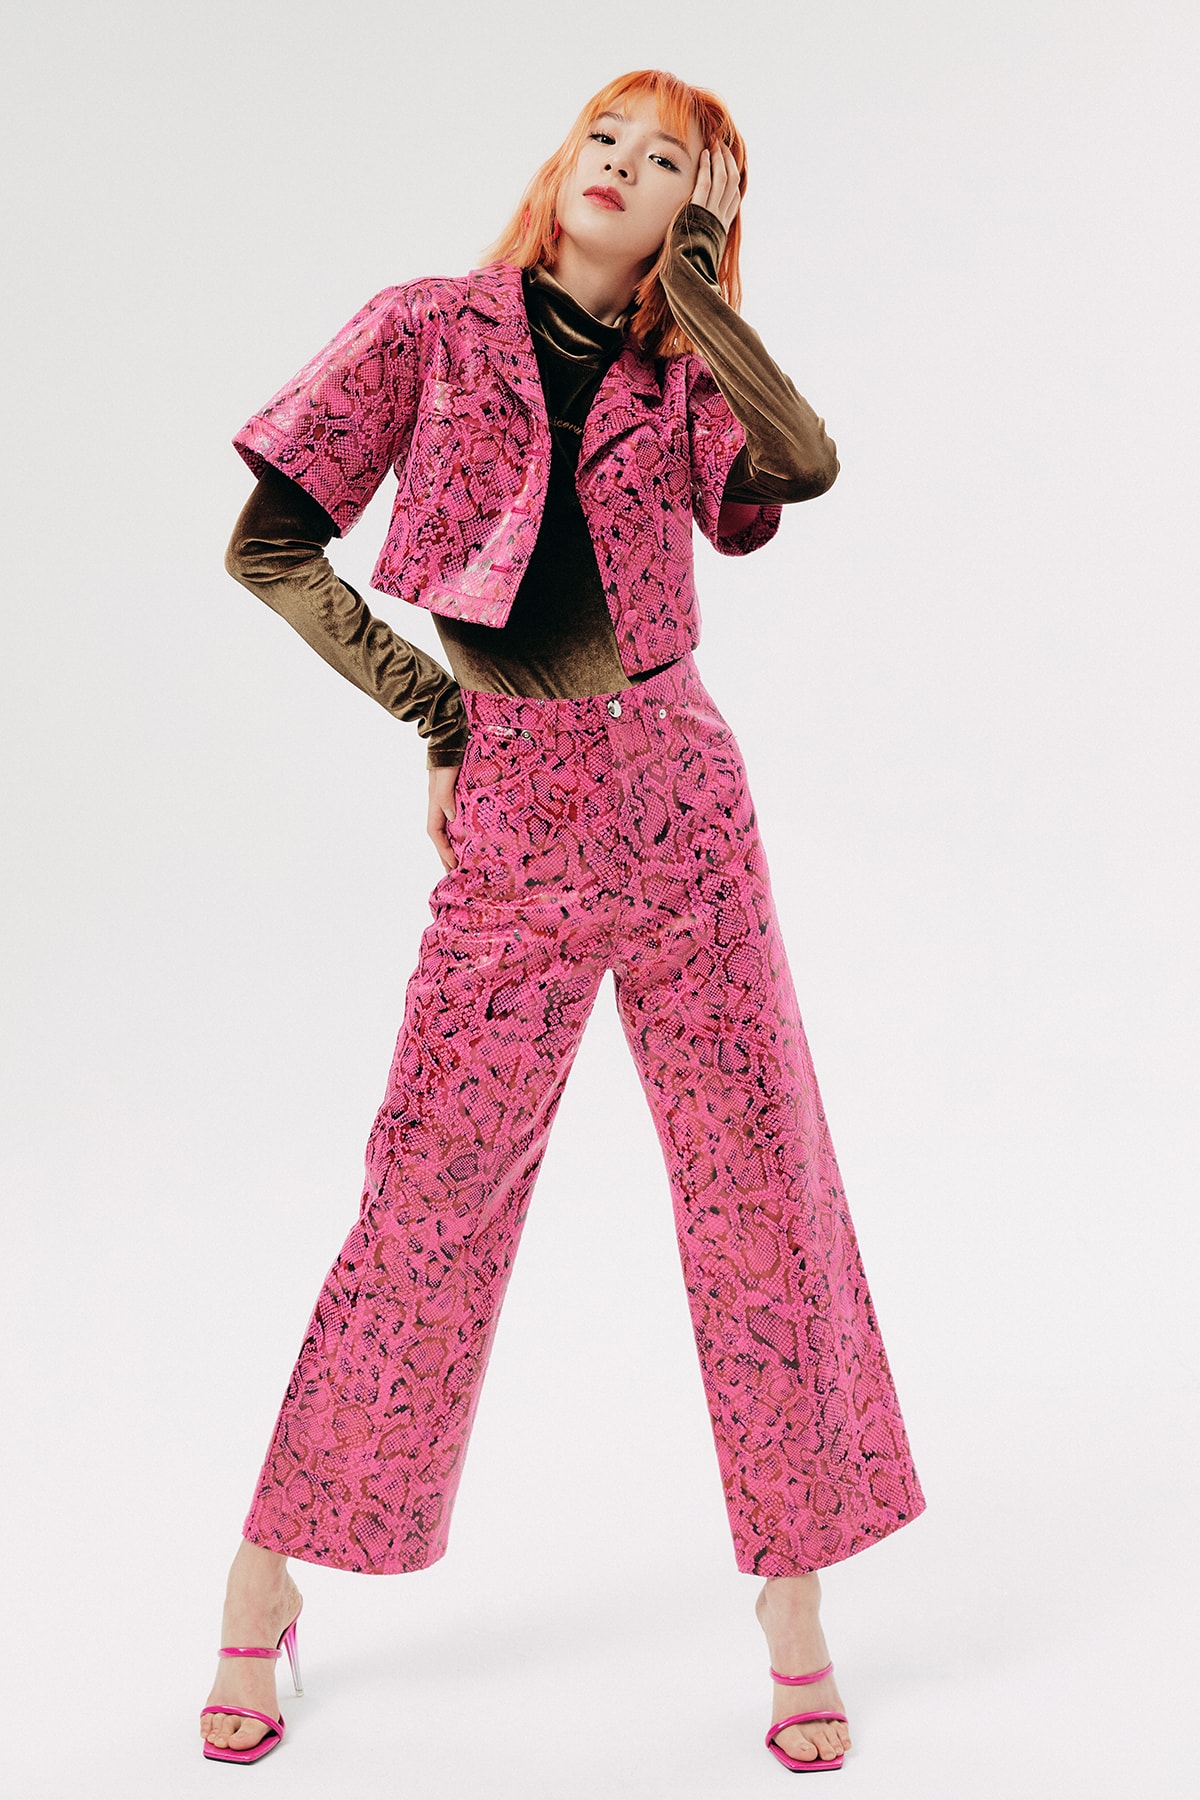 IRENEISGOOD Label Fall/Winter 2020 Collection Lookbook Snakeskin Jacket Pants Pink